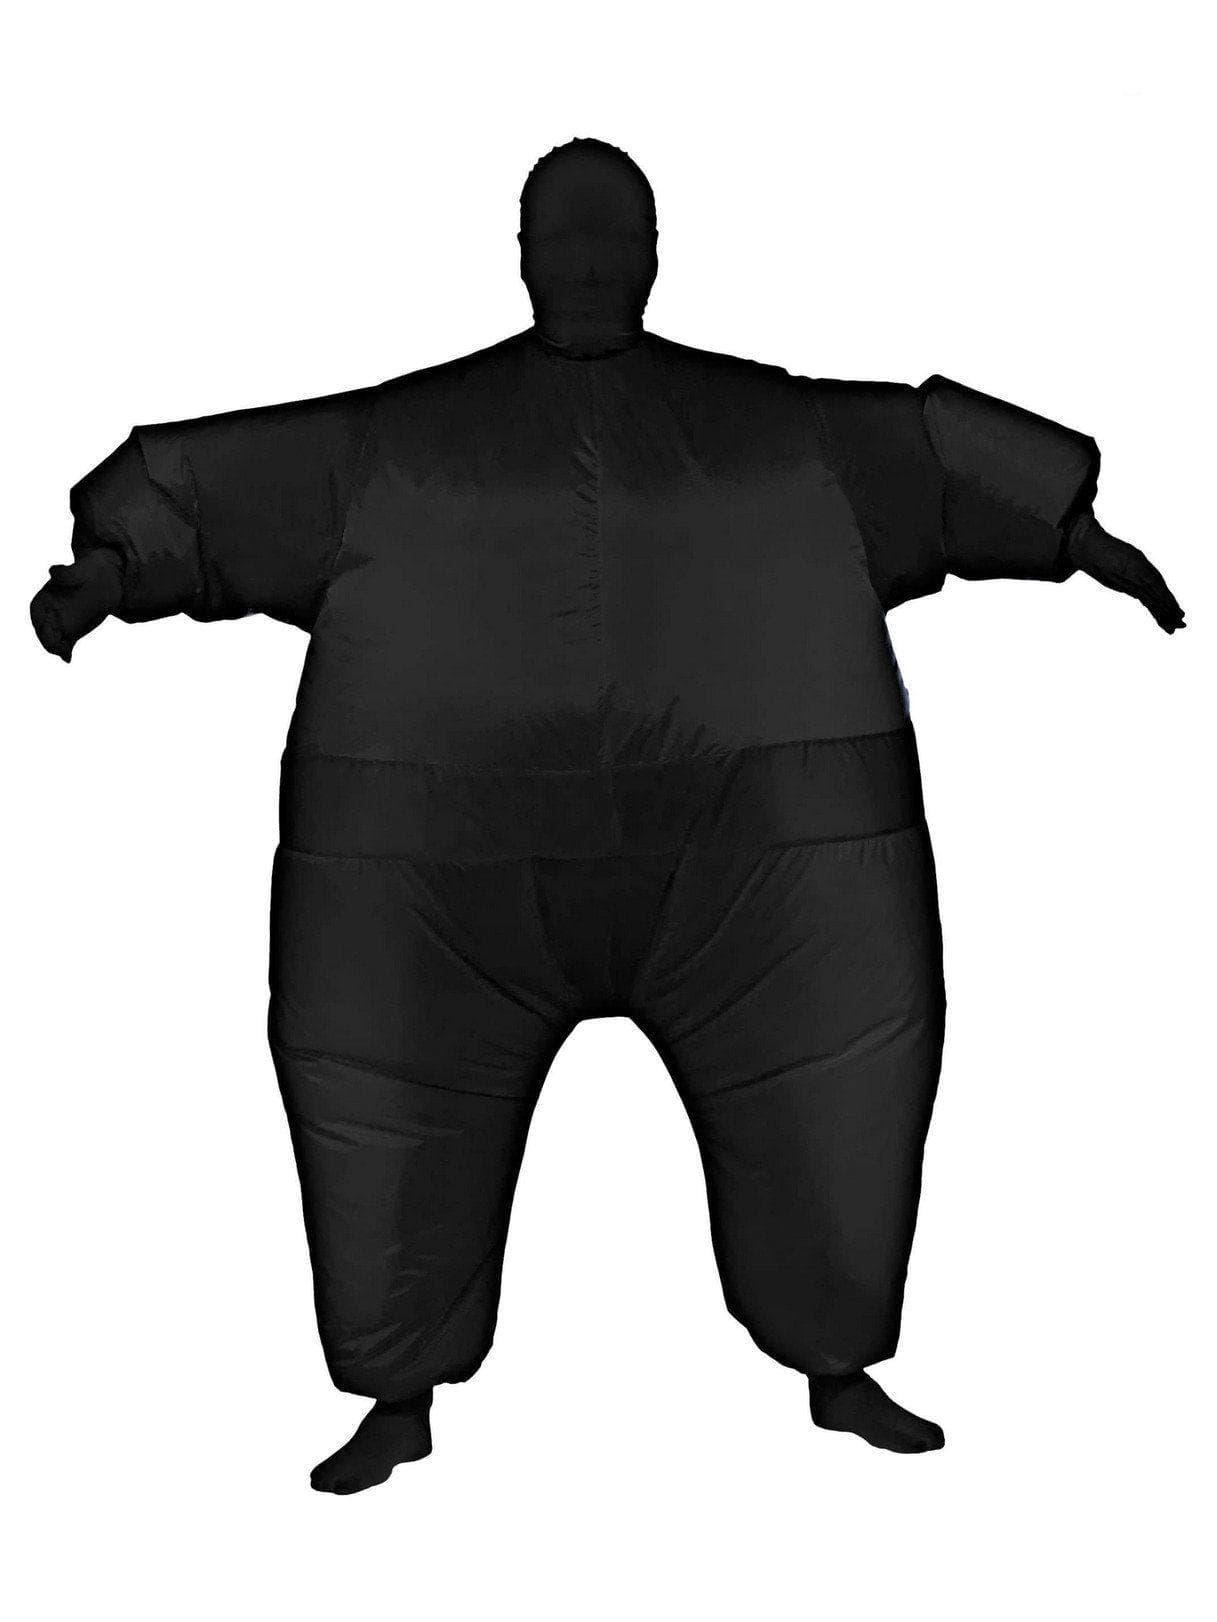 Adult Black Inflatable Jumpsuit - costumes.com